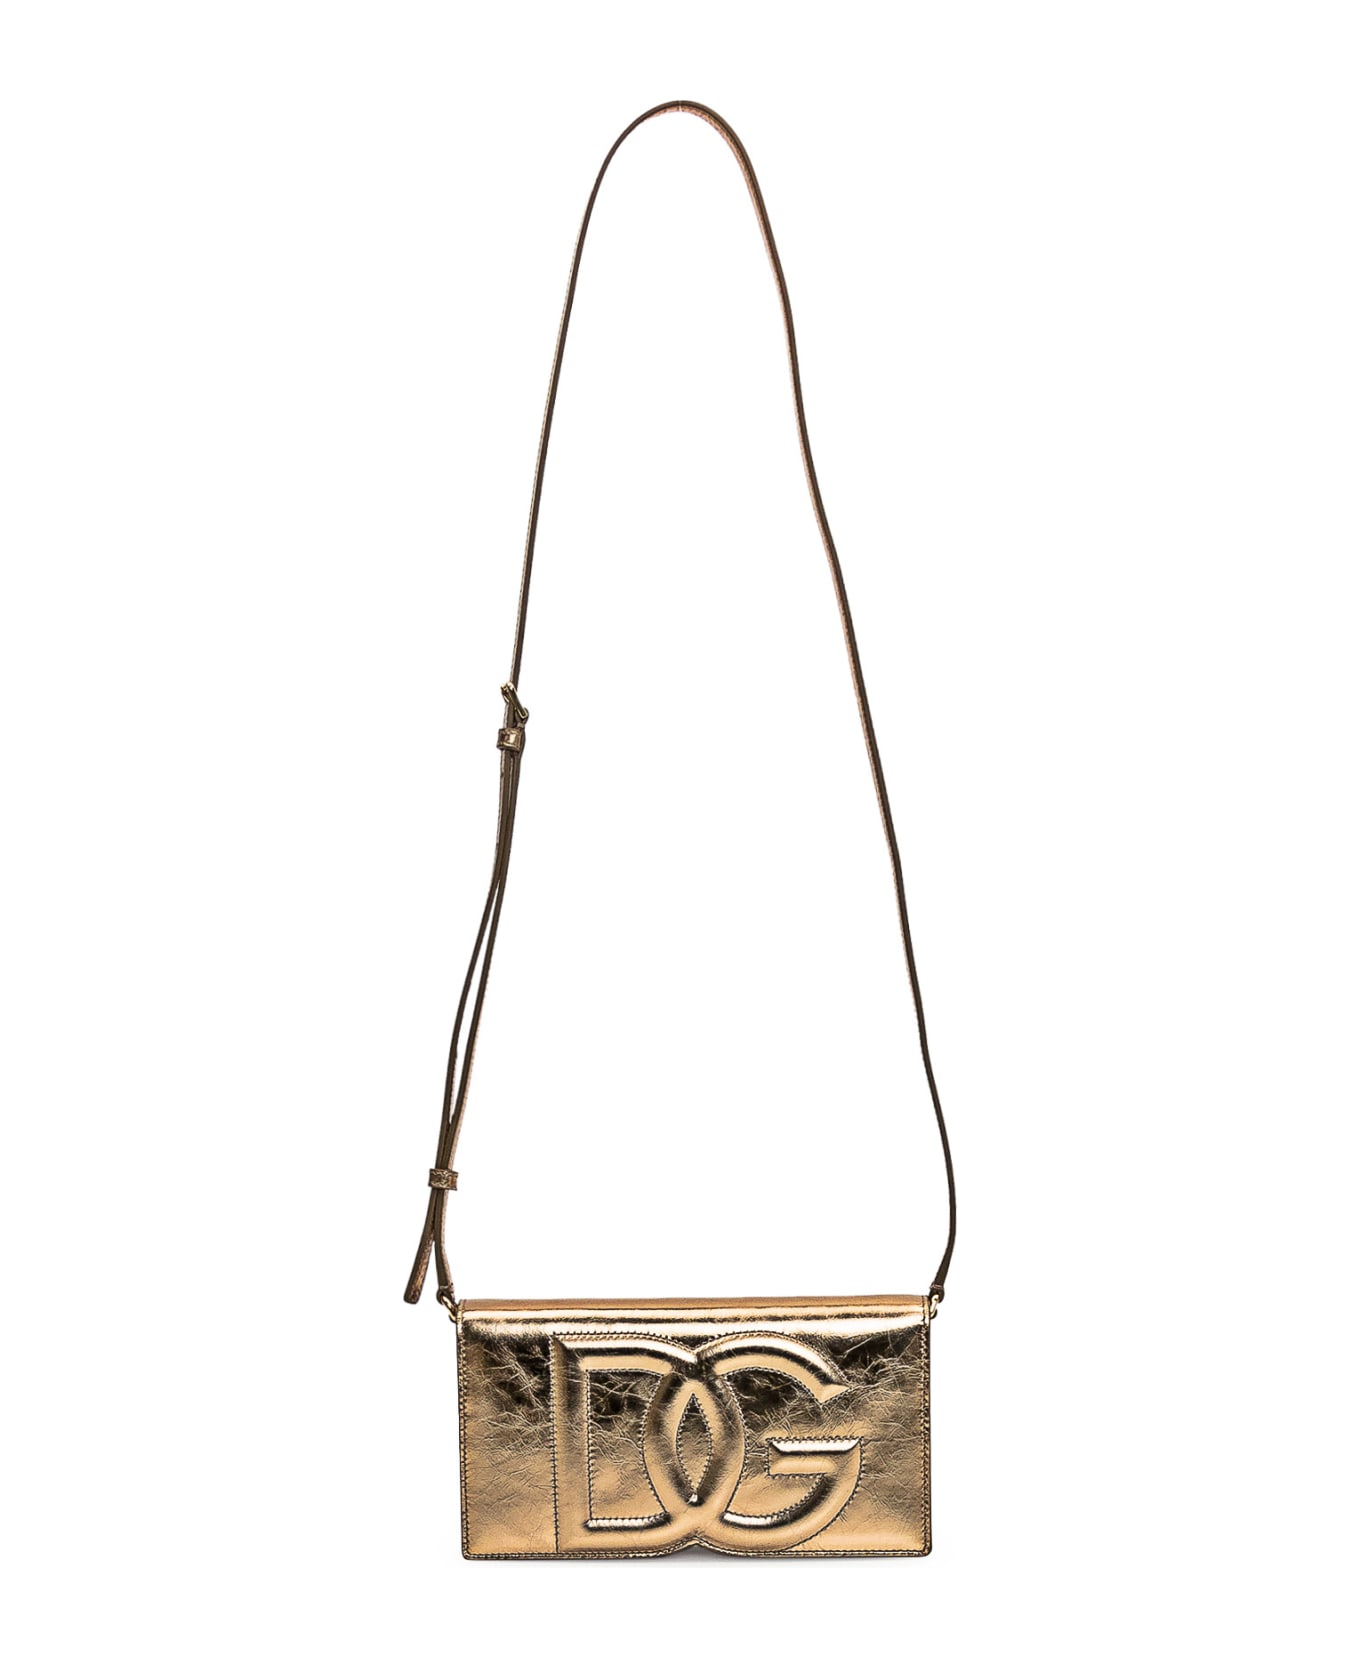 Dolce & Gabbana Shoulder Bag - Oro クラッチバッグ